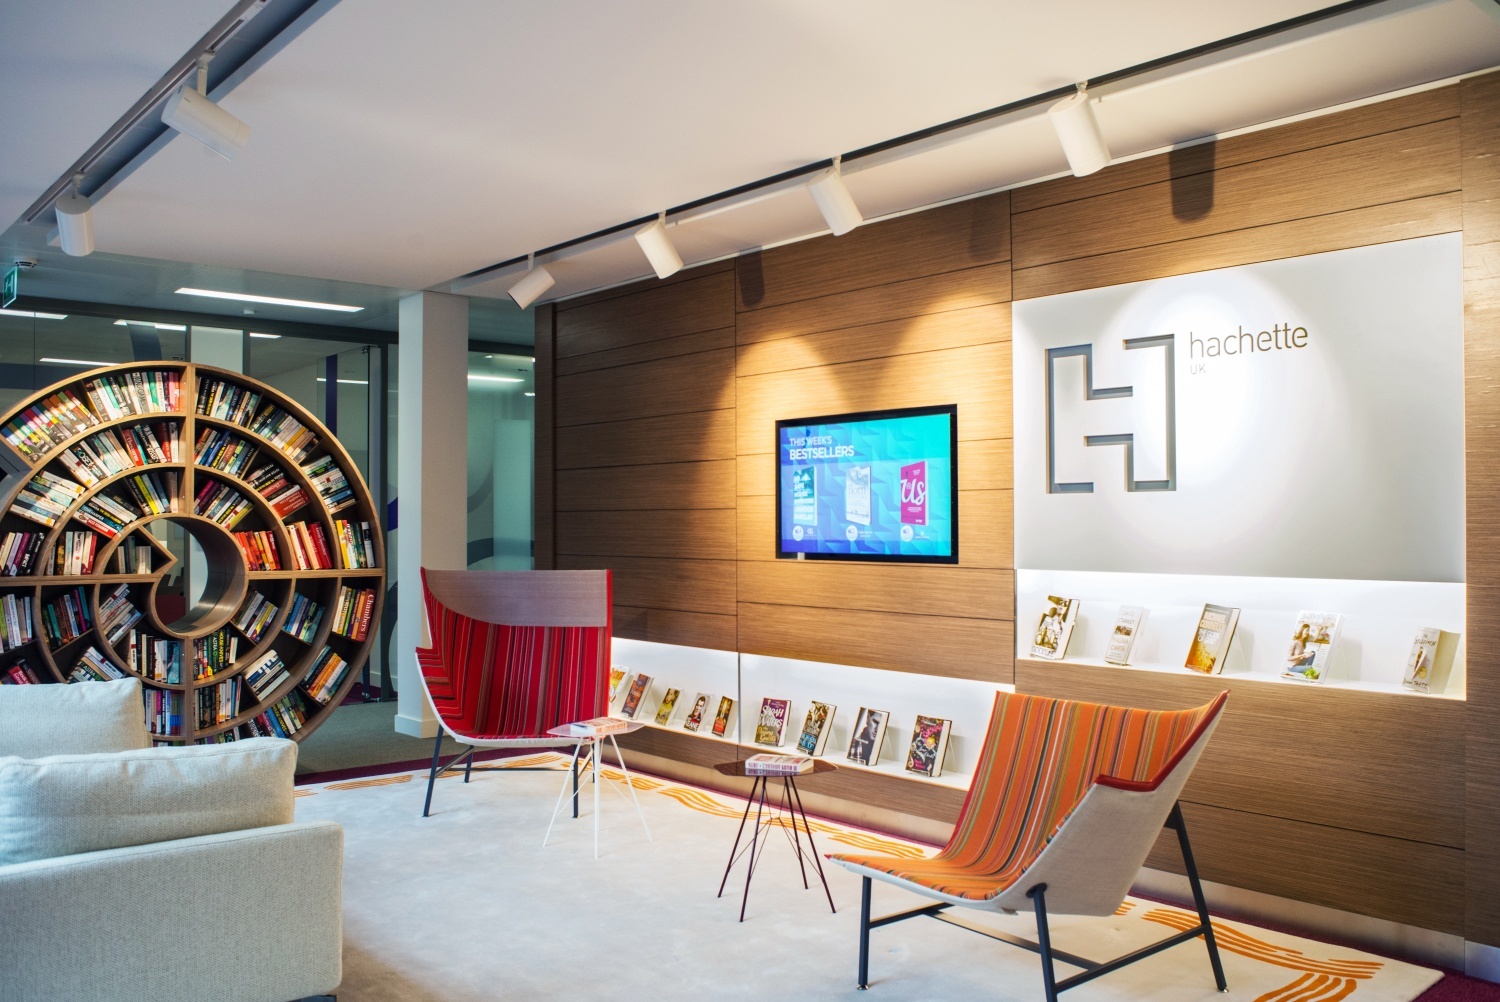 A Tour of Hachette’s New Beautiful London Headquarters